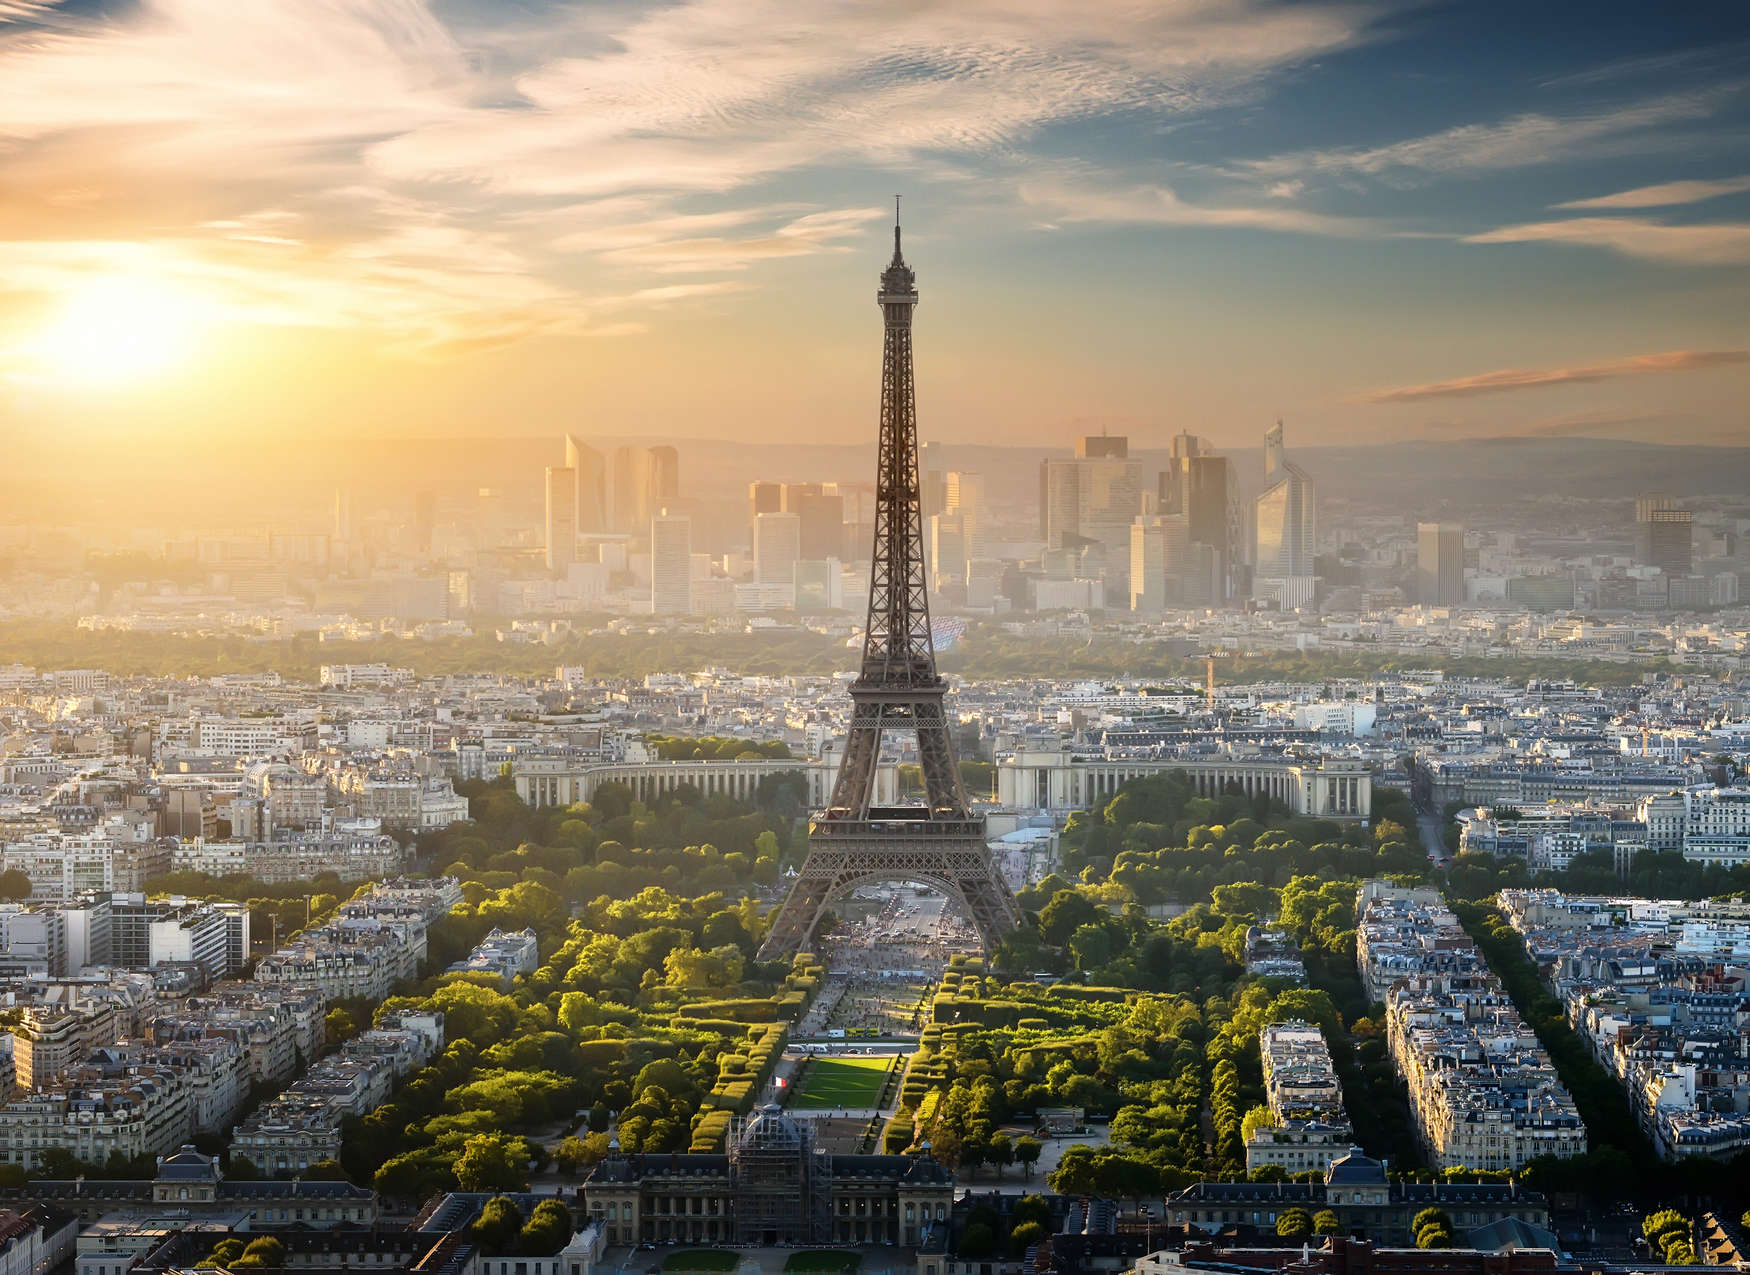             Fototapete Eifel Turm Paris – Grün, Grau, Gelb
        